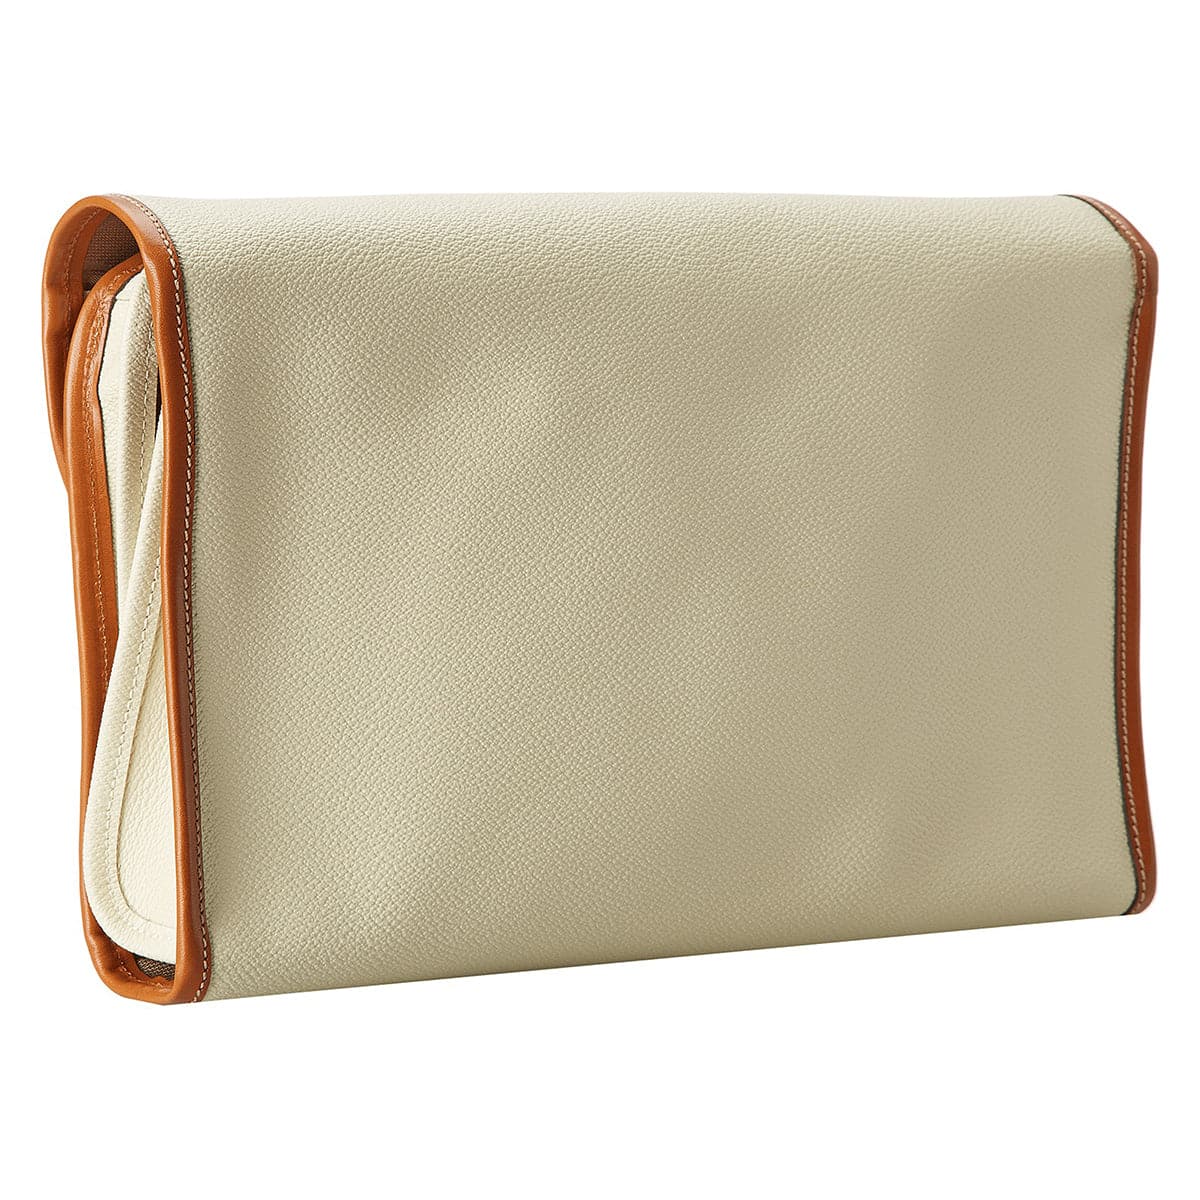 Bric's Firenze Tri-Fold Traveler Bag